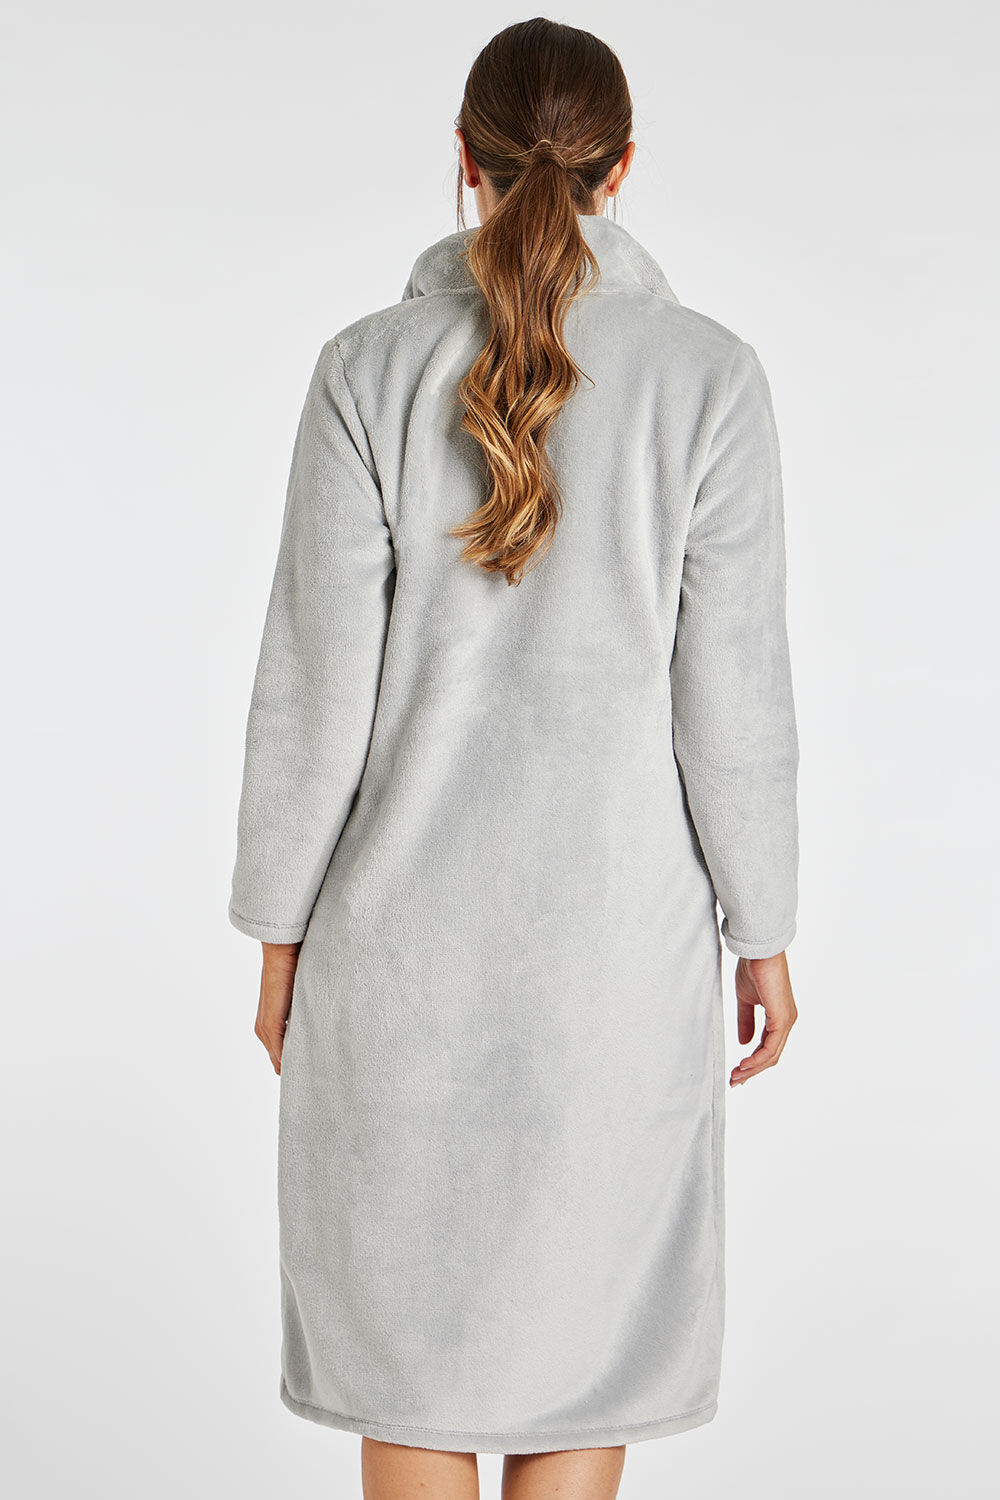 REVAHI Women's Hooded Robe Ladies Zip Up Dressing Gowns Long Sleeve  Housecoat Long Nightdresses Casual Warm Sleepwear Bathrobe with Pockets,  S-2XL : Amazon.co.uk: Fashion